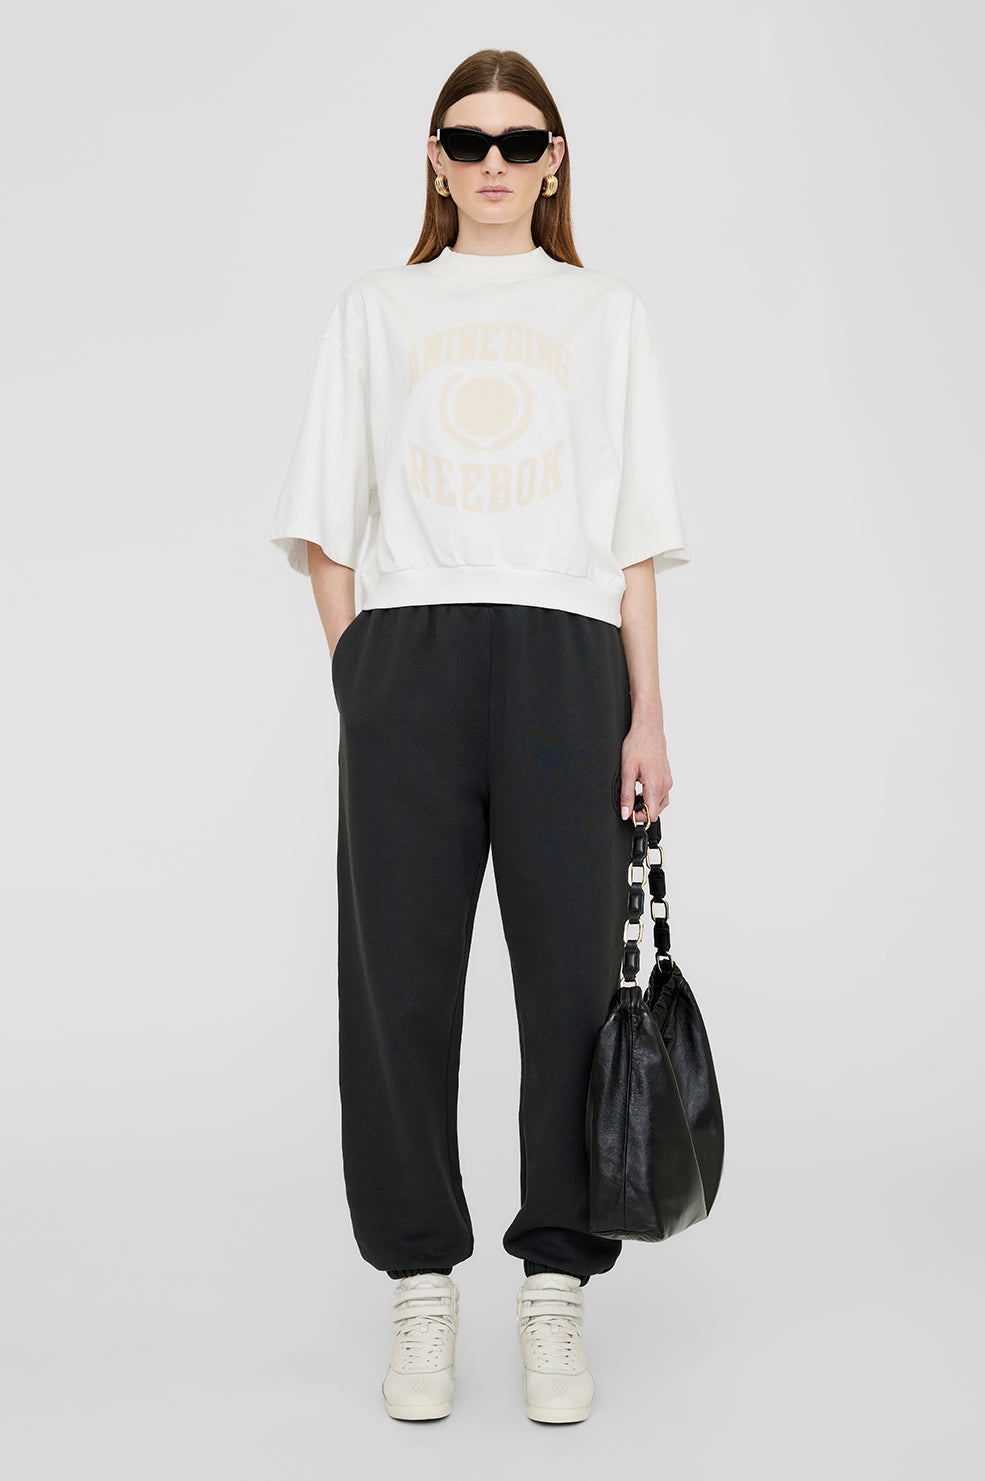 Reebok x Anine Bing T-Shirt - Chalk - On Model Front